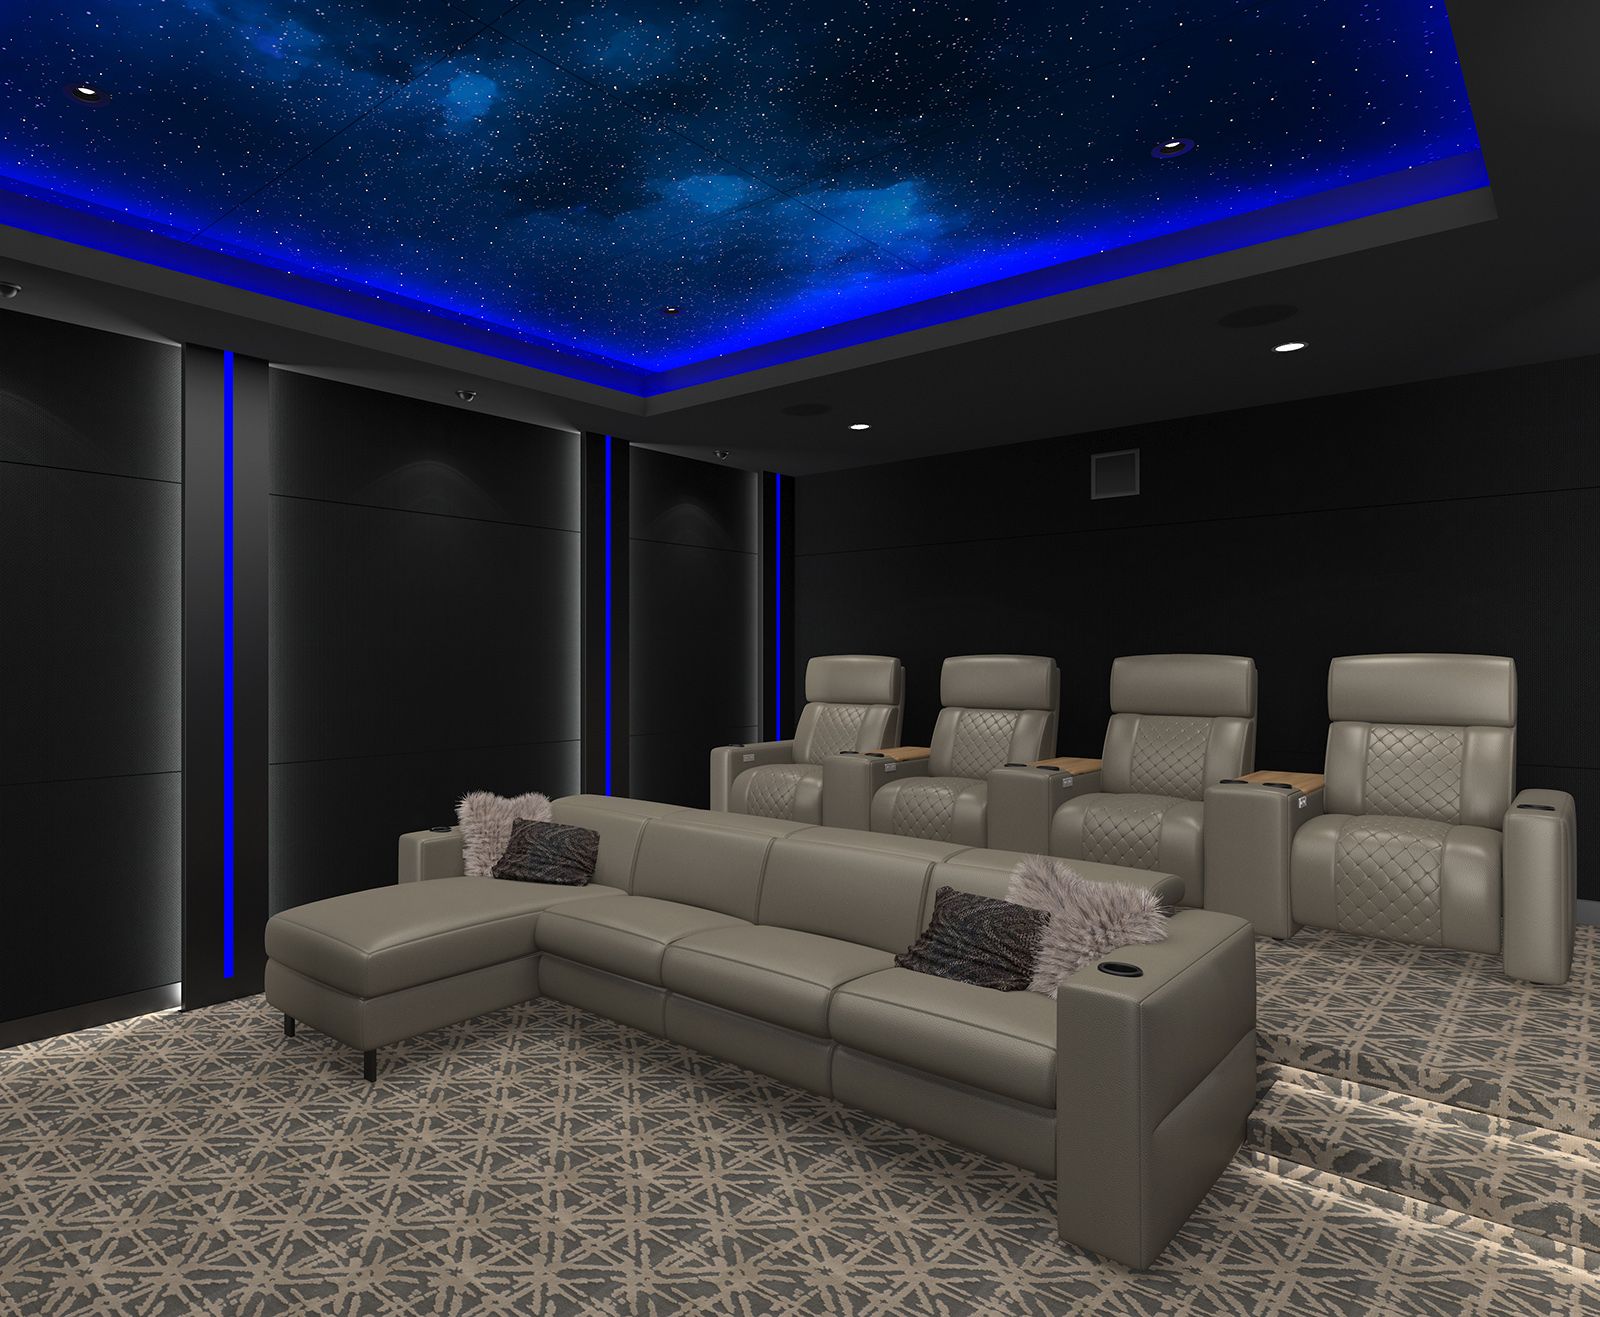 Home Theater Room Lighting: Illuminating Your Movie Magic